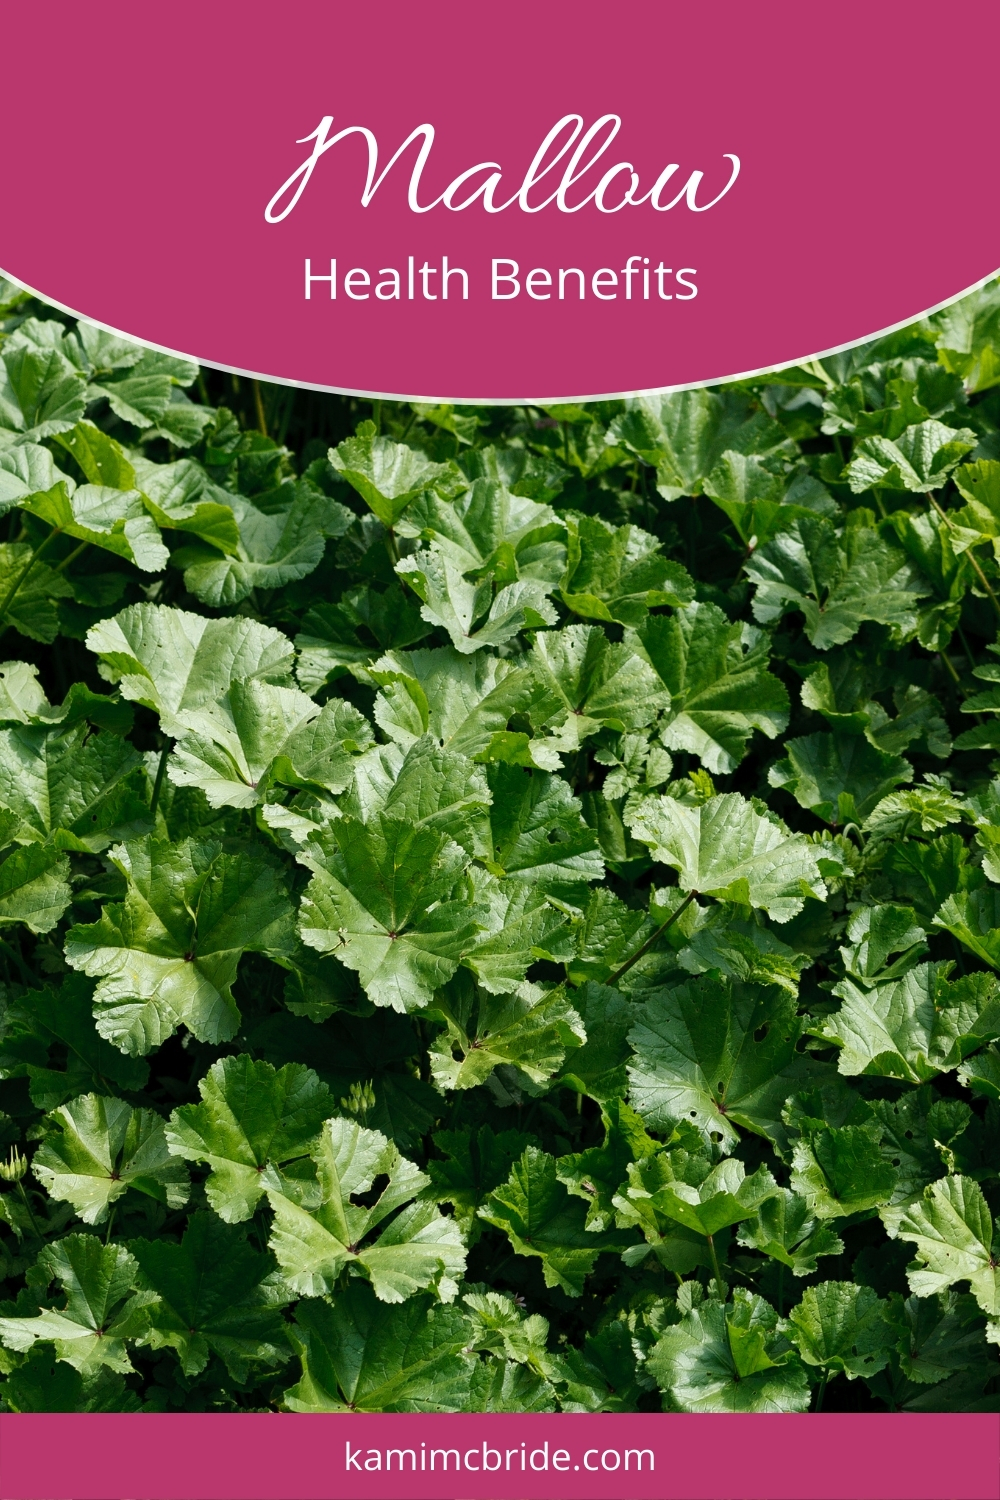 mallow plant health benefits